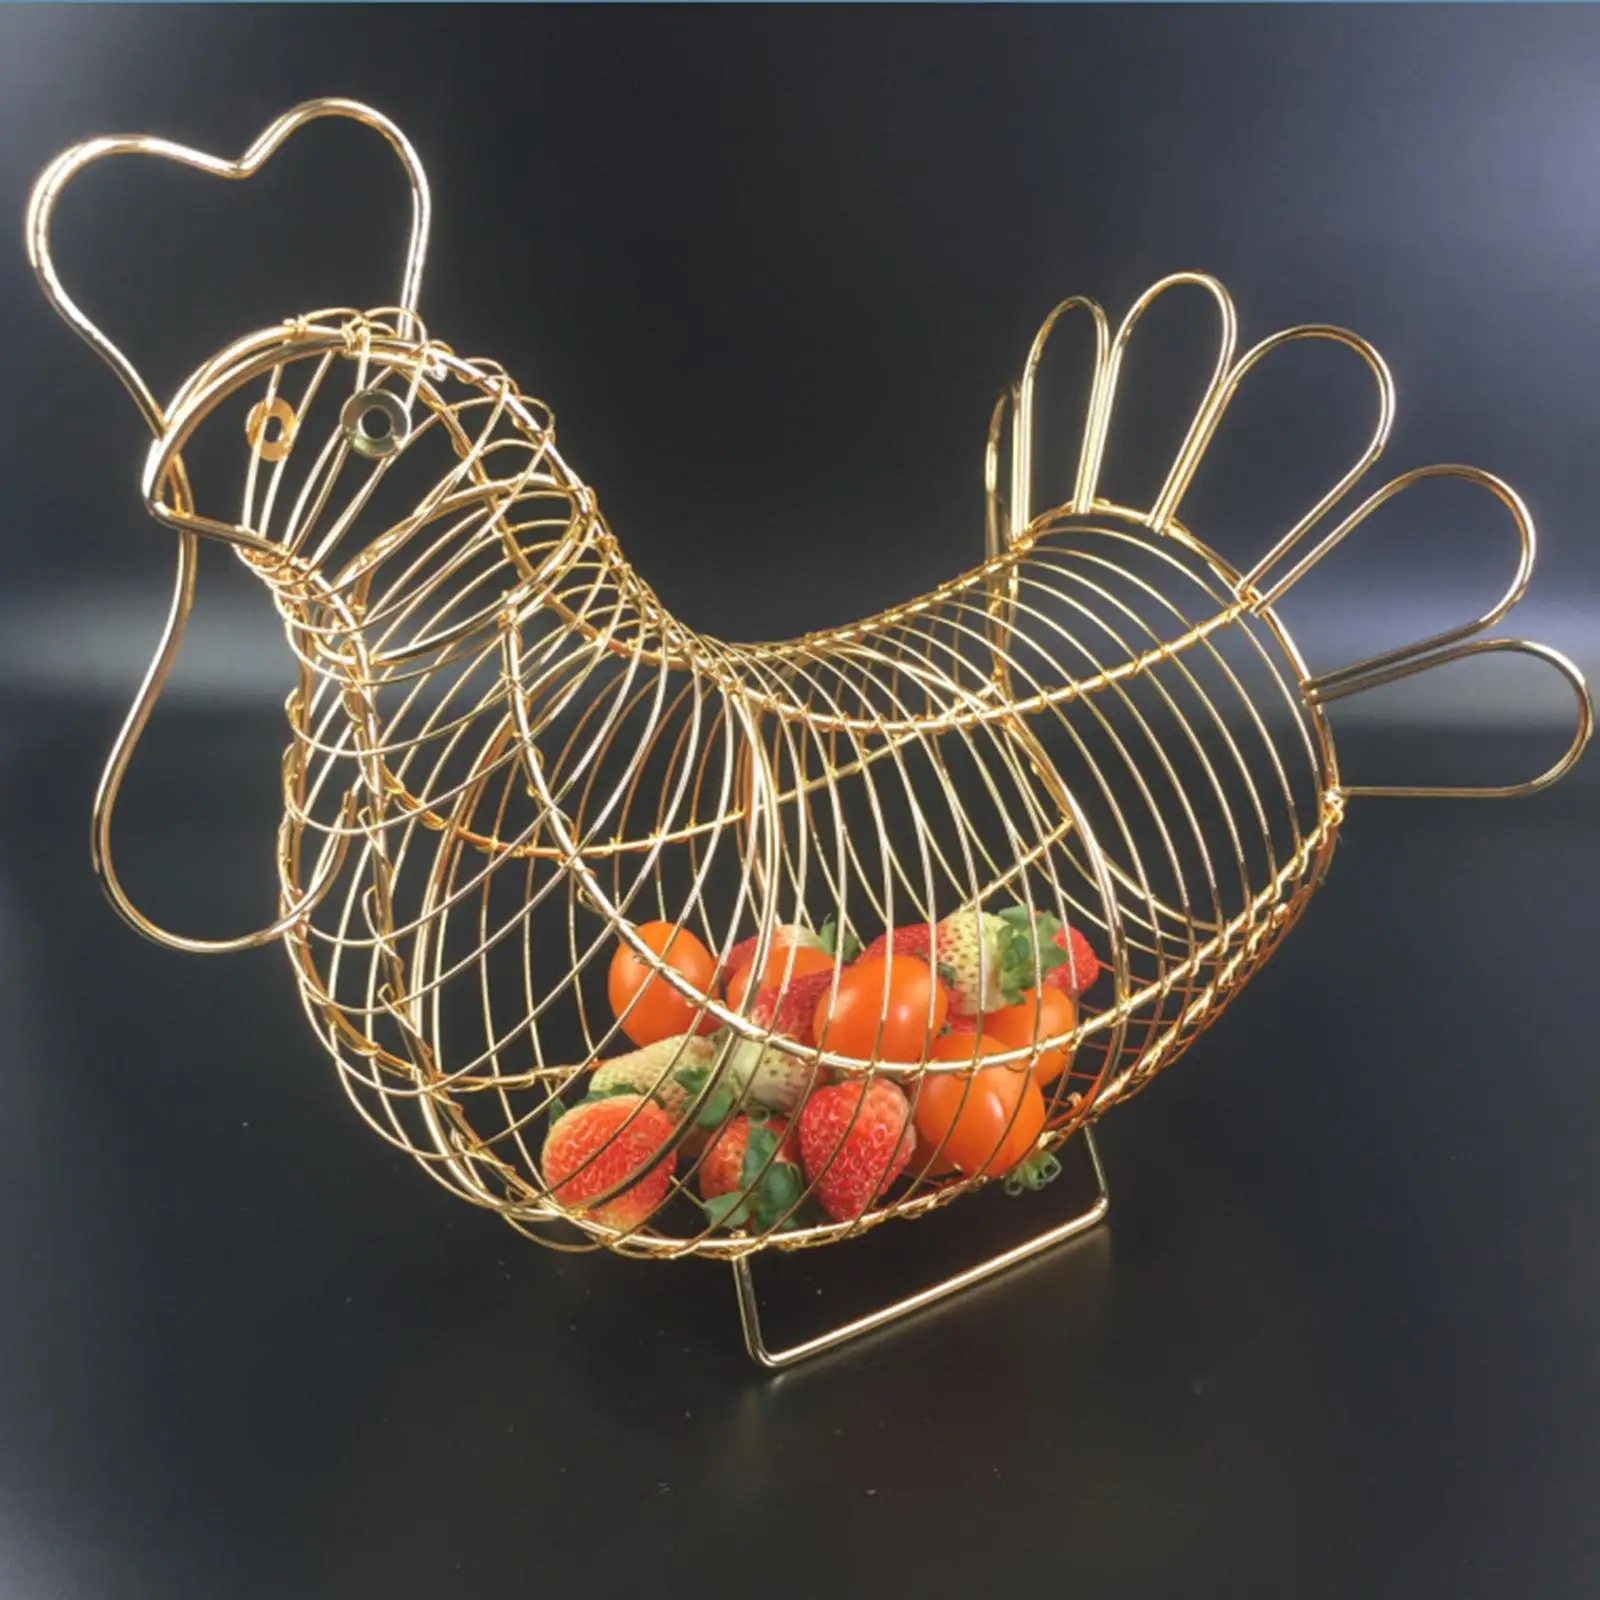 Hen Shaped Food Storage Basket Decorative for Countertop Pantry Restaurant